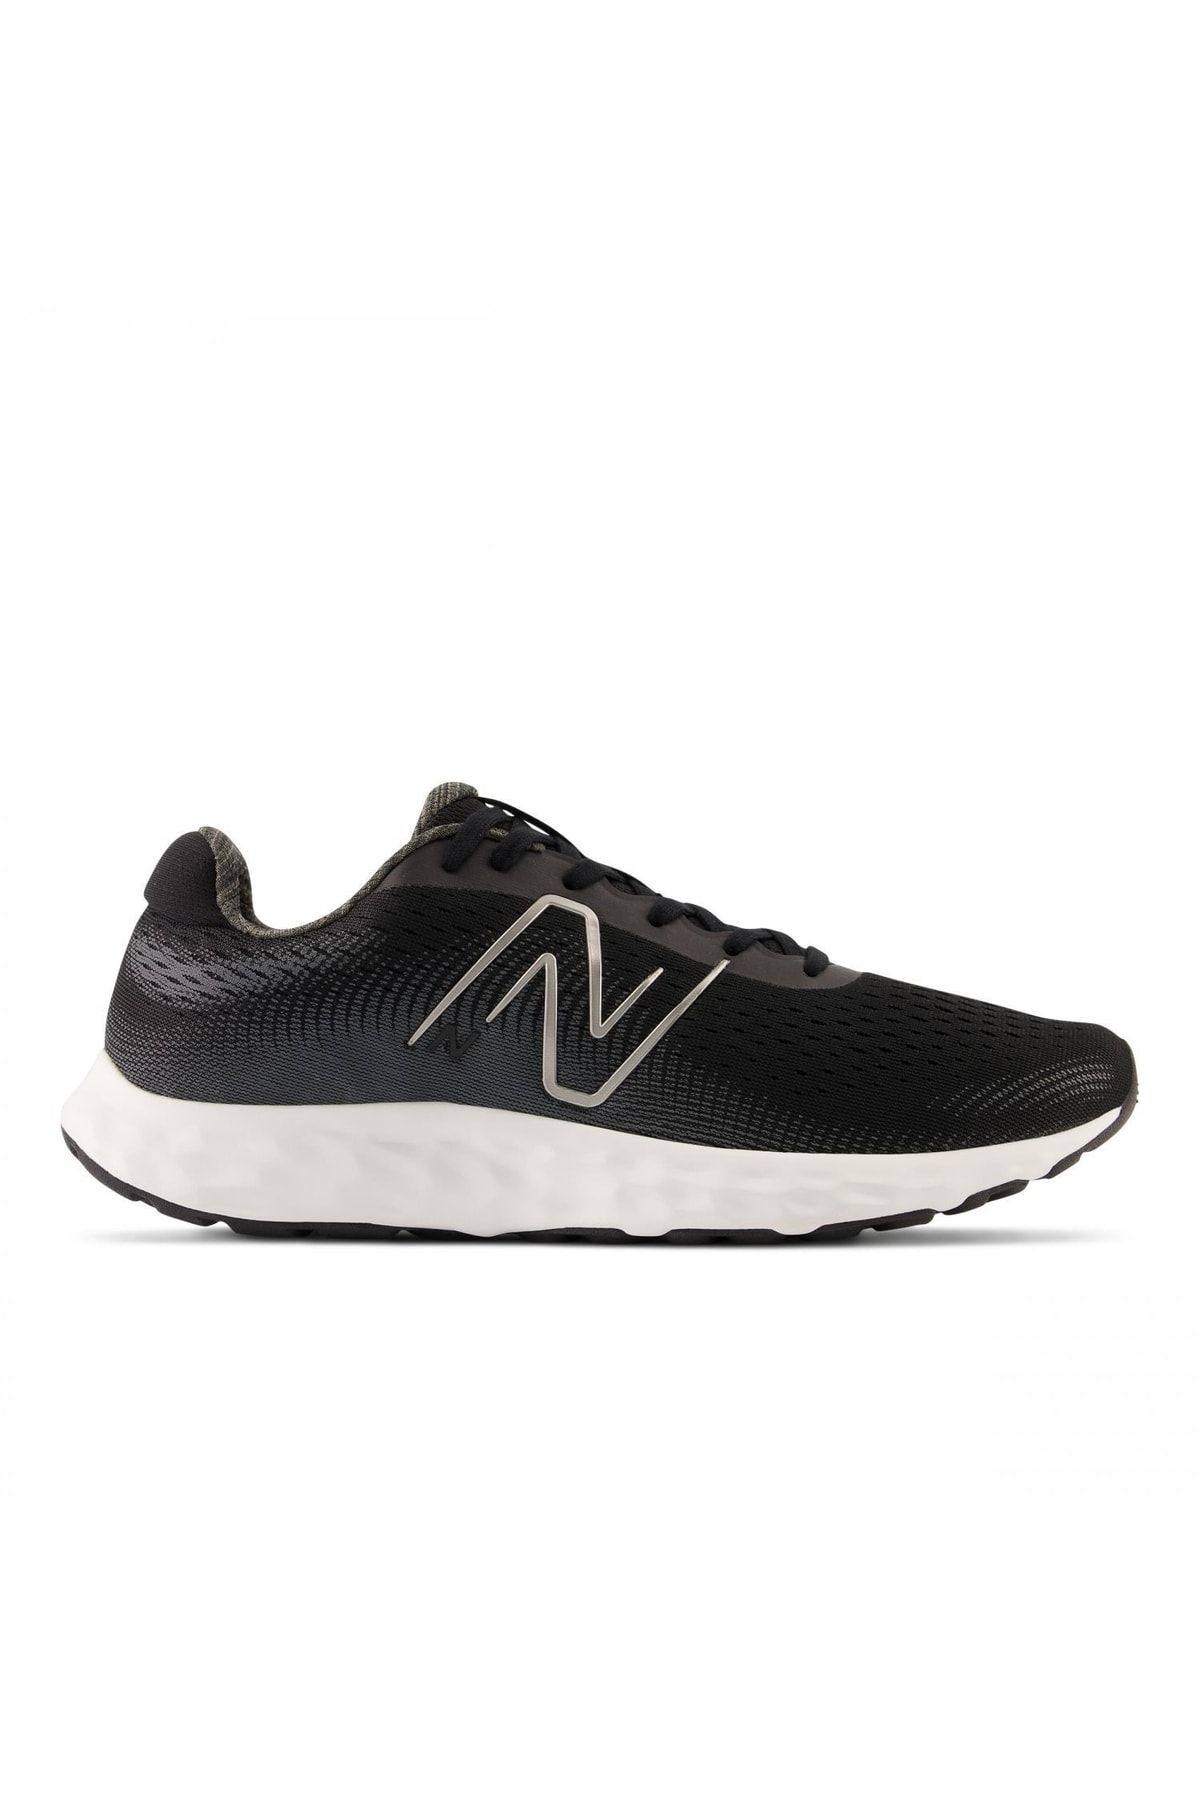 New Balance Nb Running Men Shoes